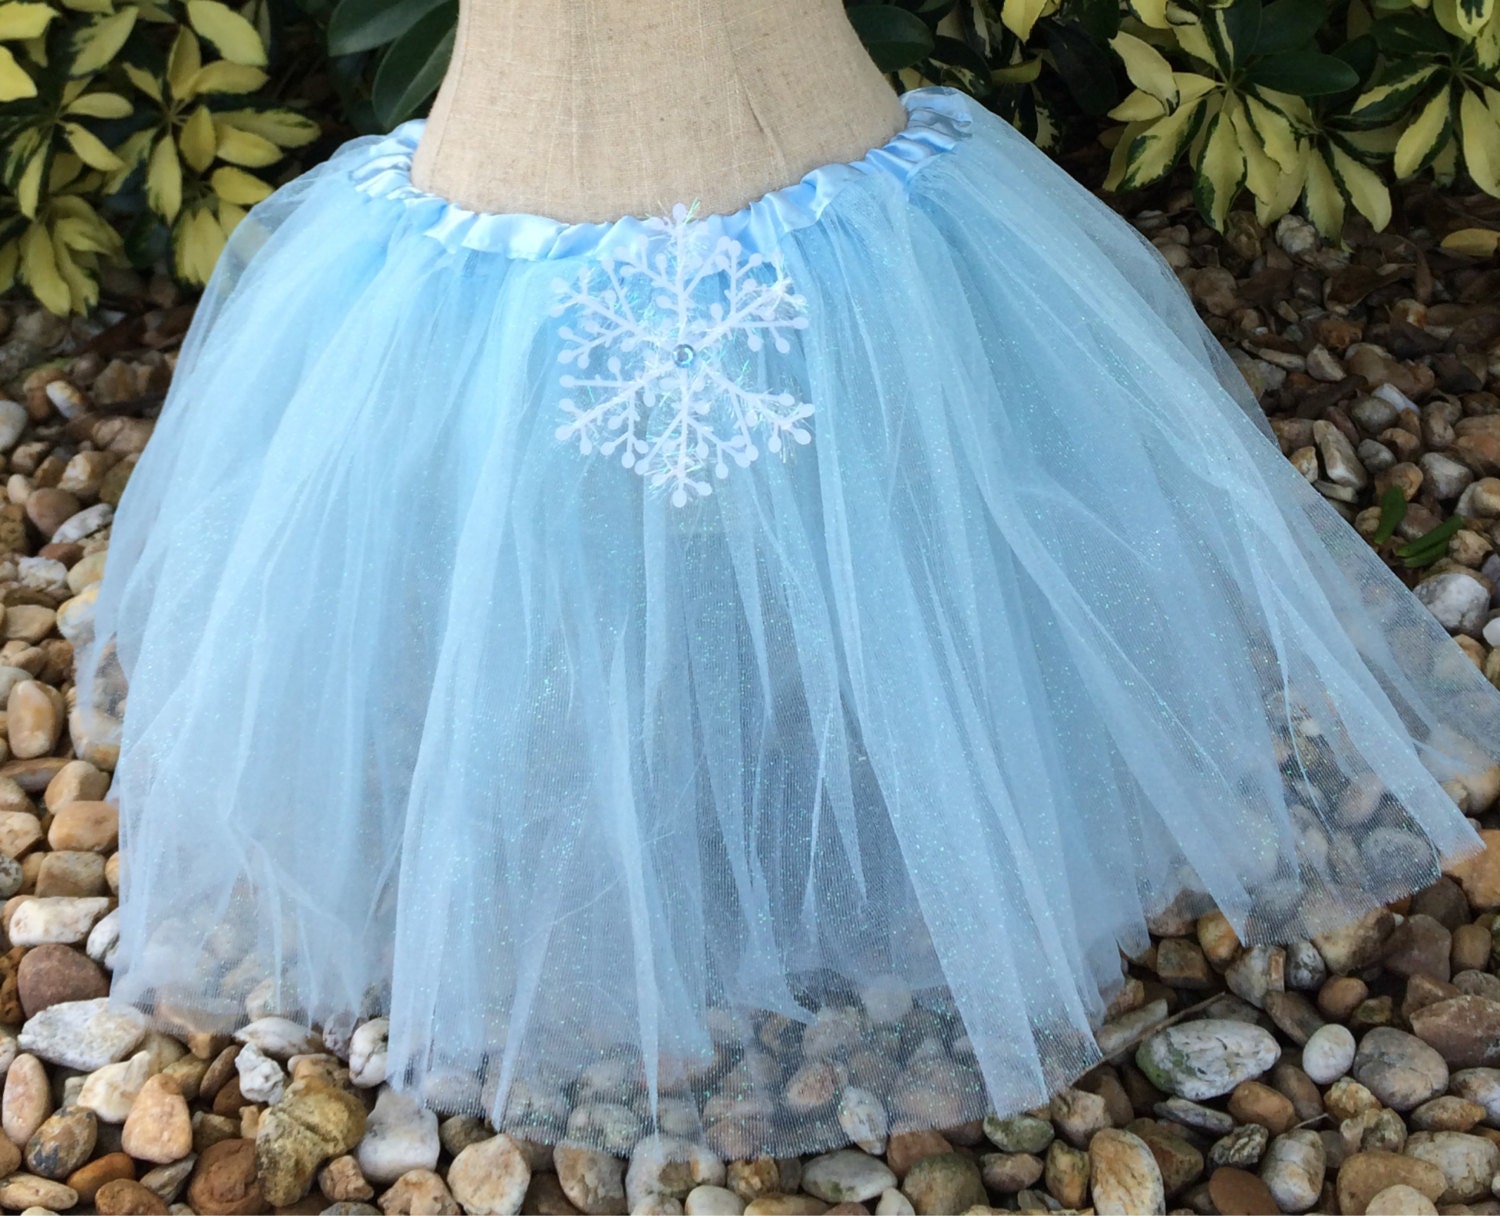 frozen tutu dining room skirt